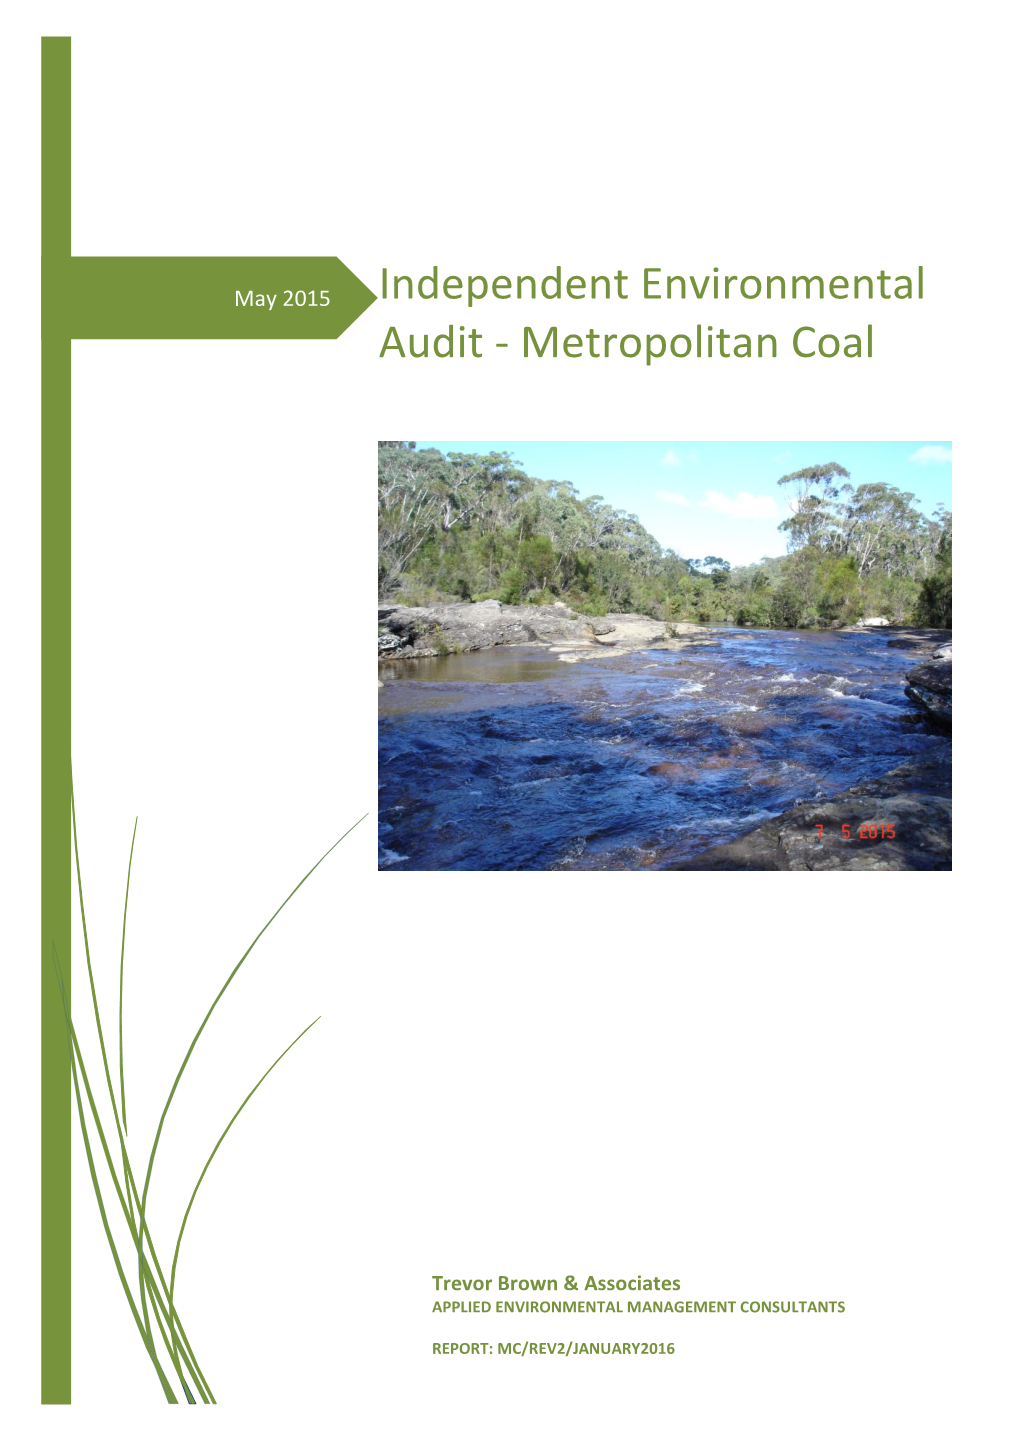 Independent Environmental Audit - Metropolitan Coal